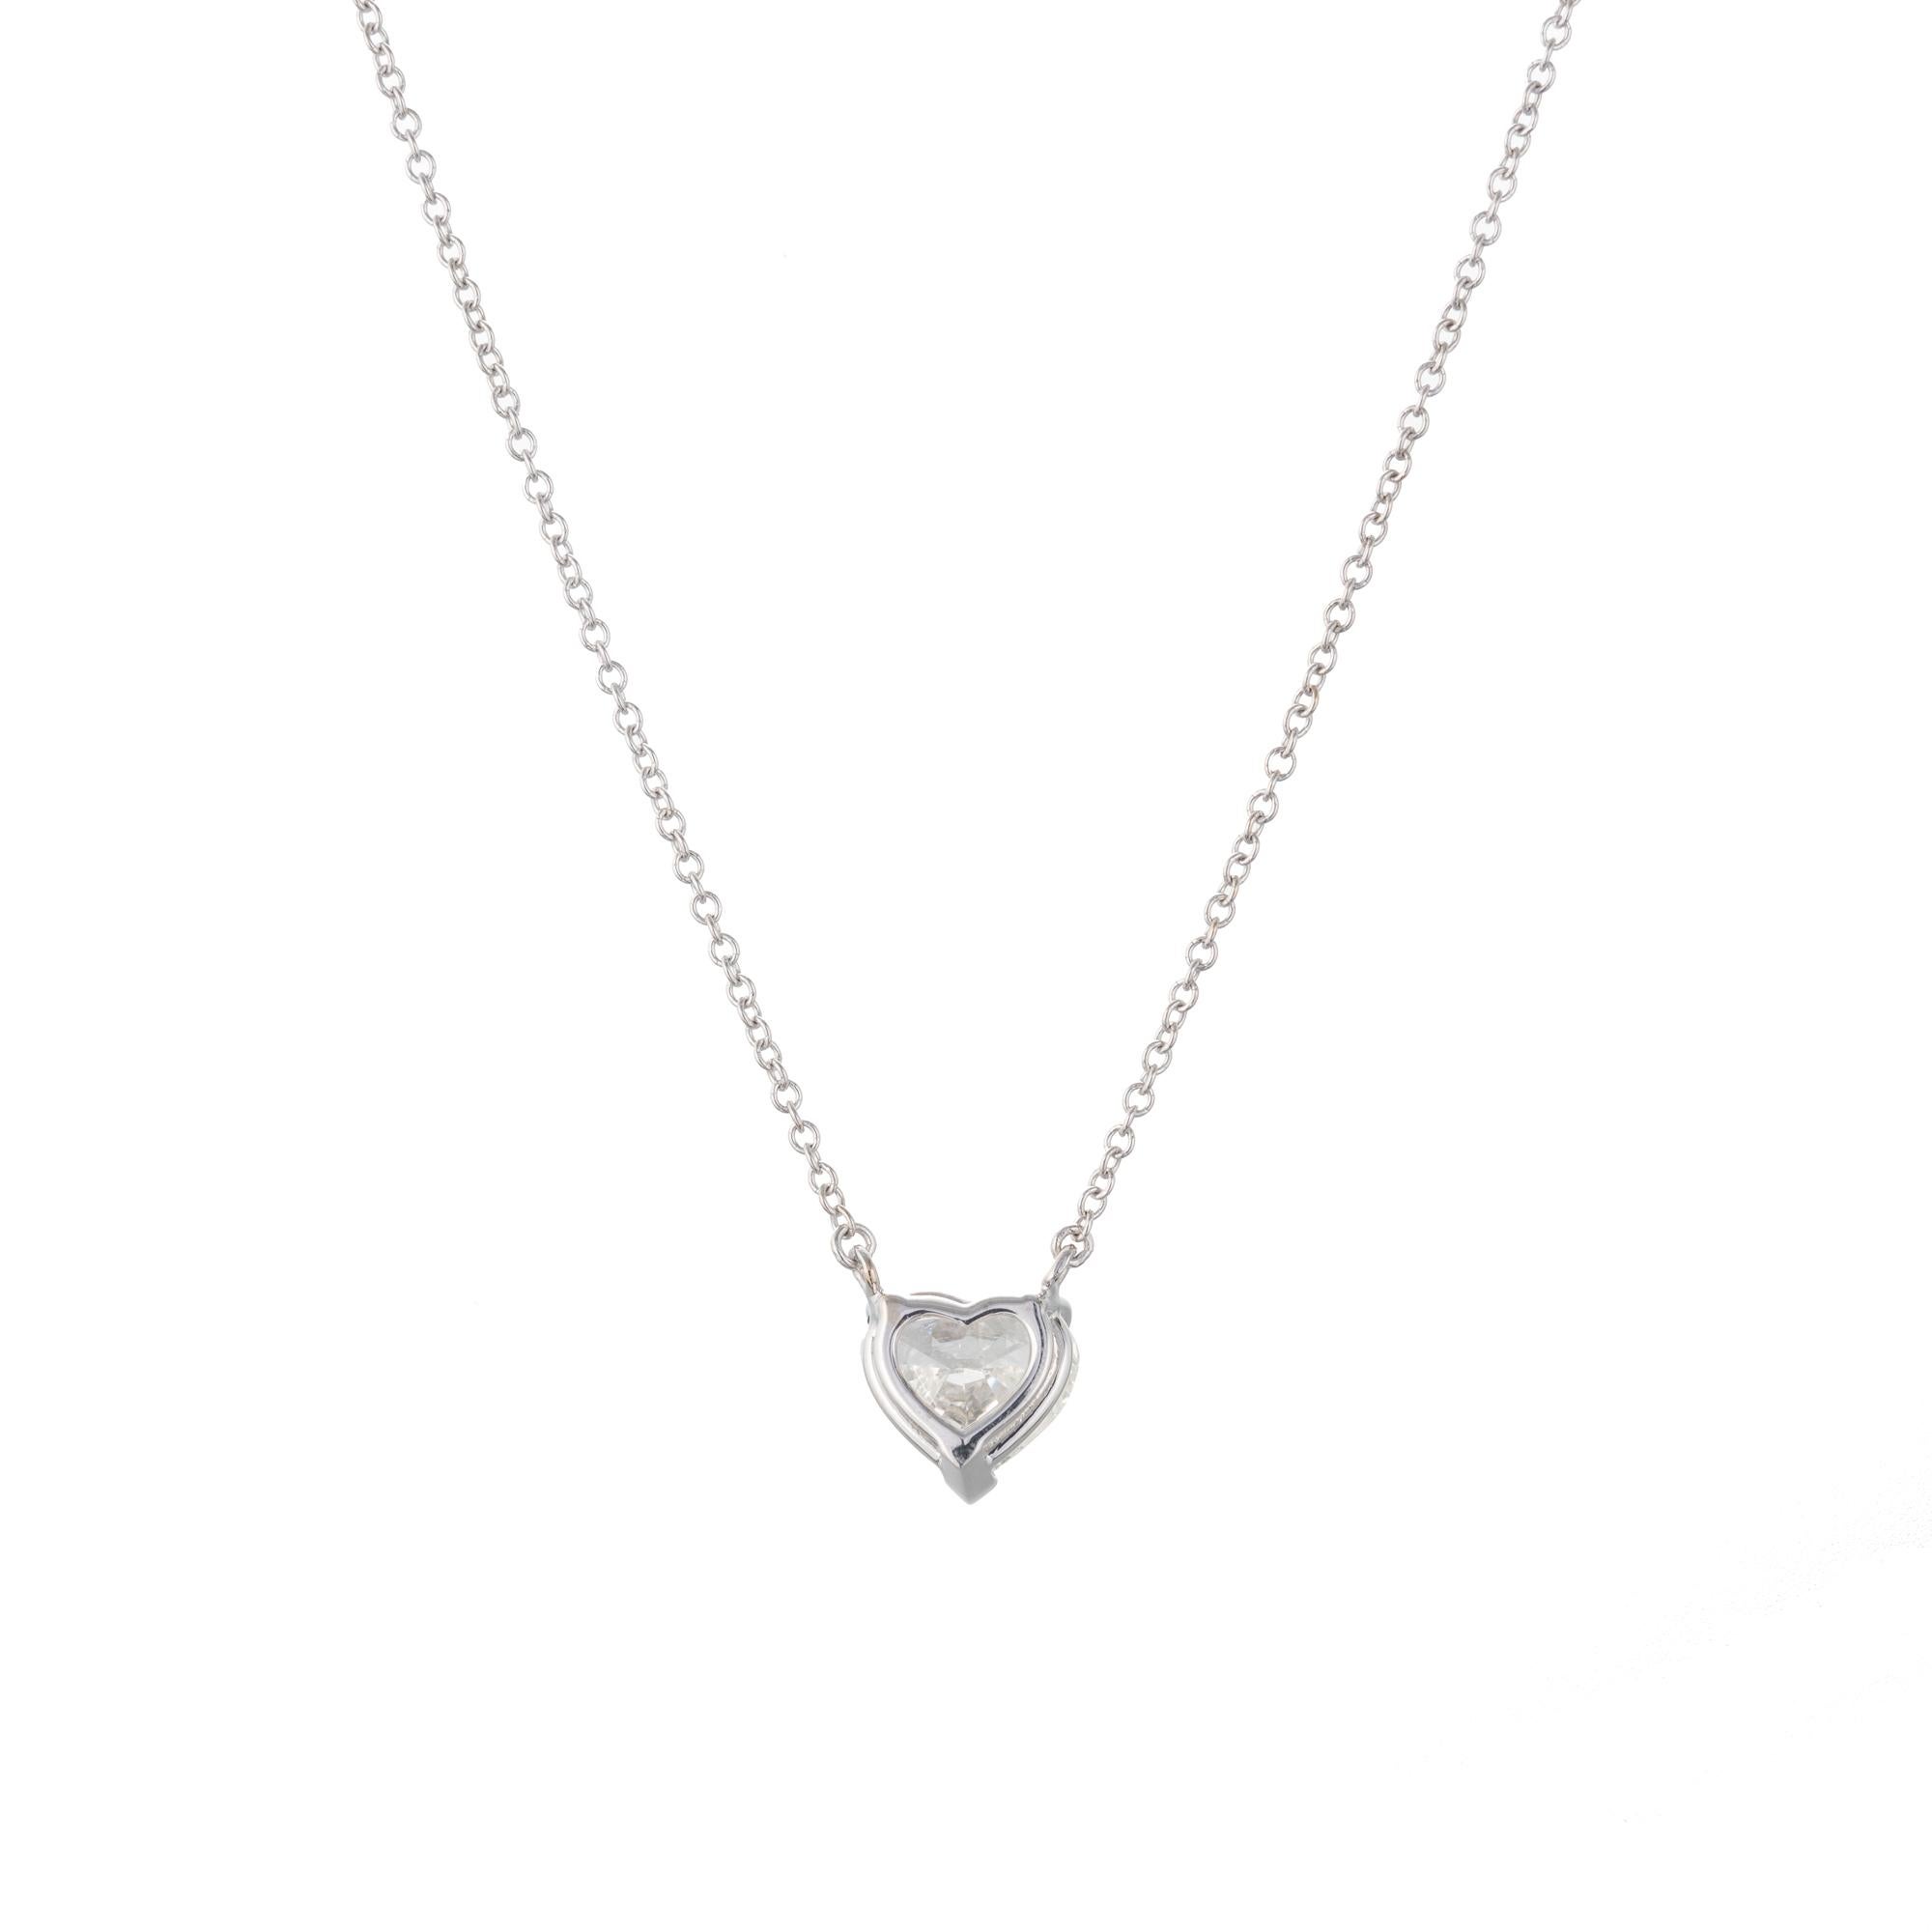 Women's GIA Certified 1.05 Carat Heart Shaped Diamond White Gold Pendant Necklace